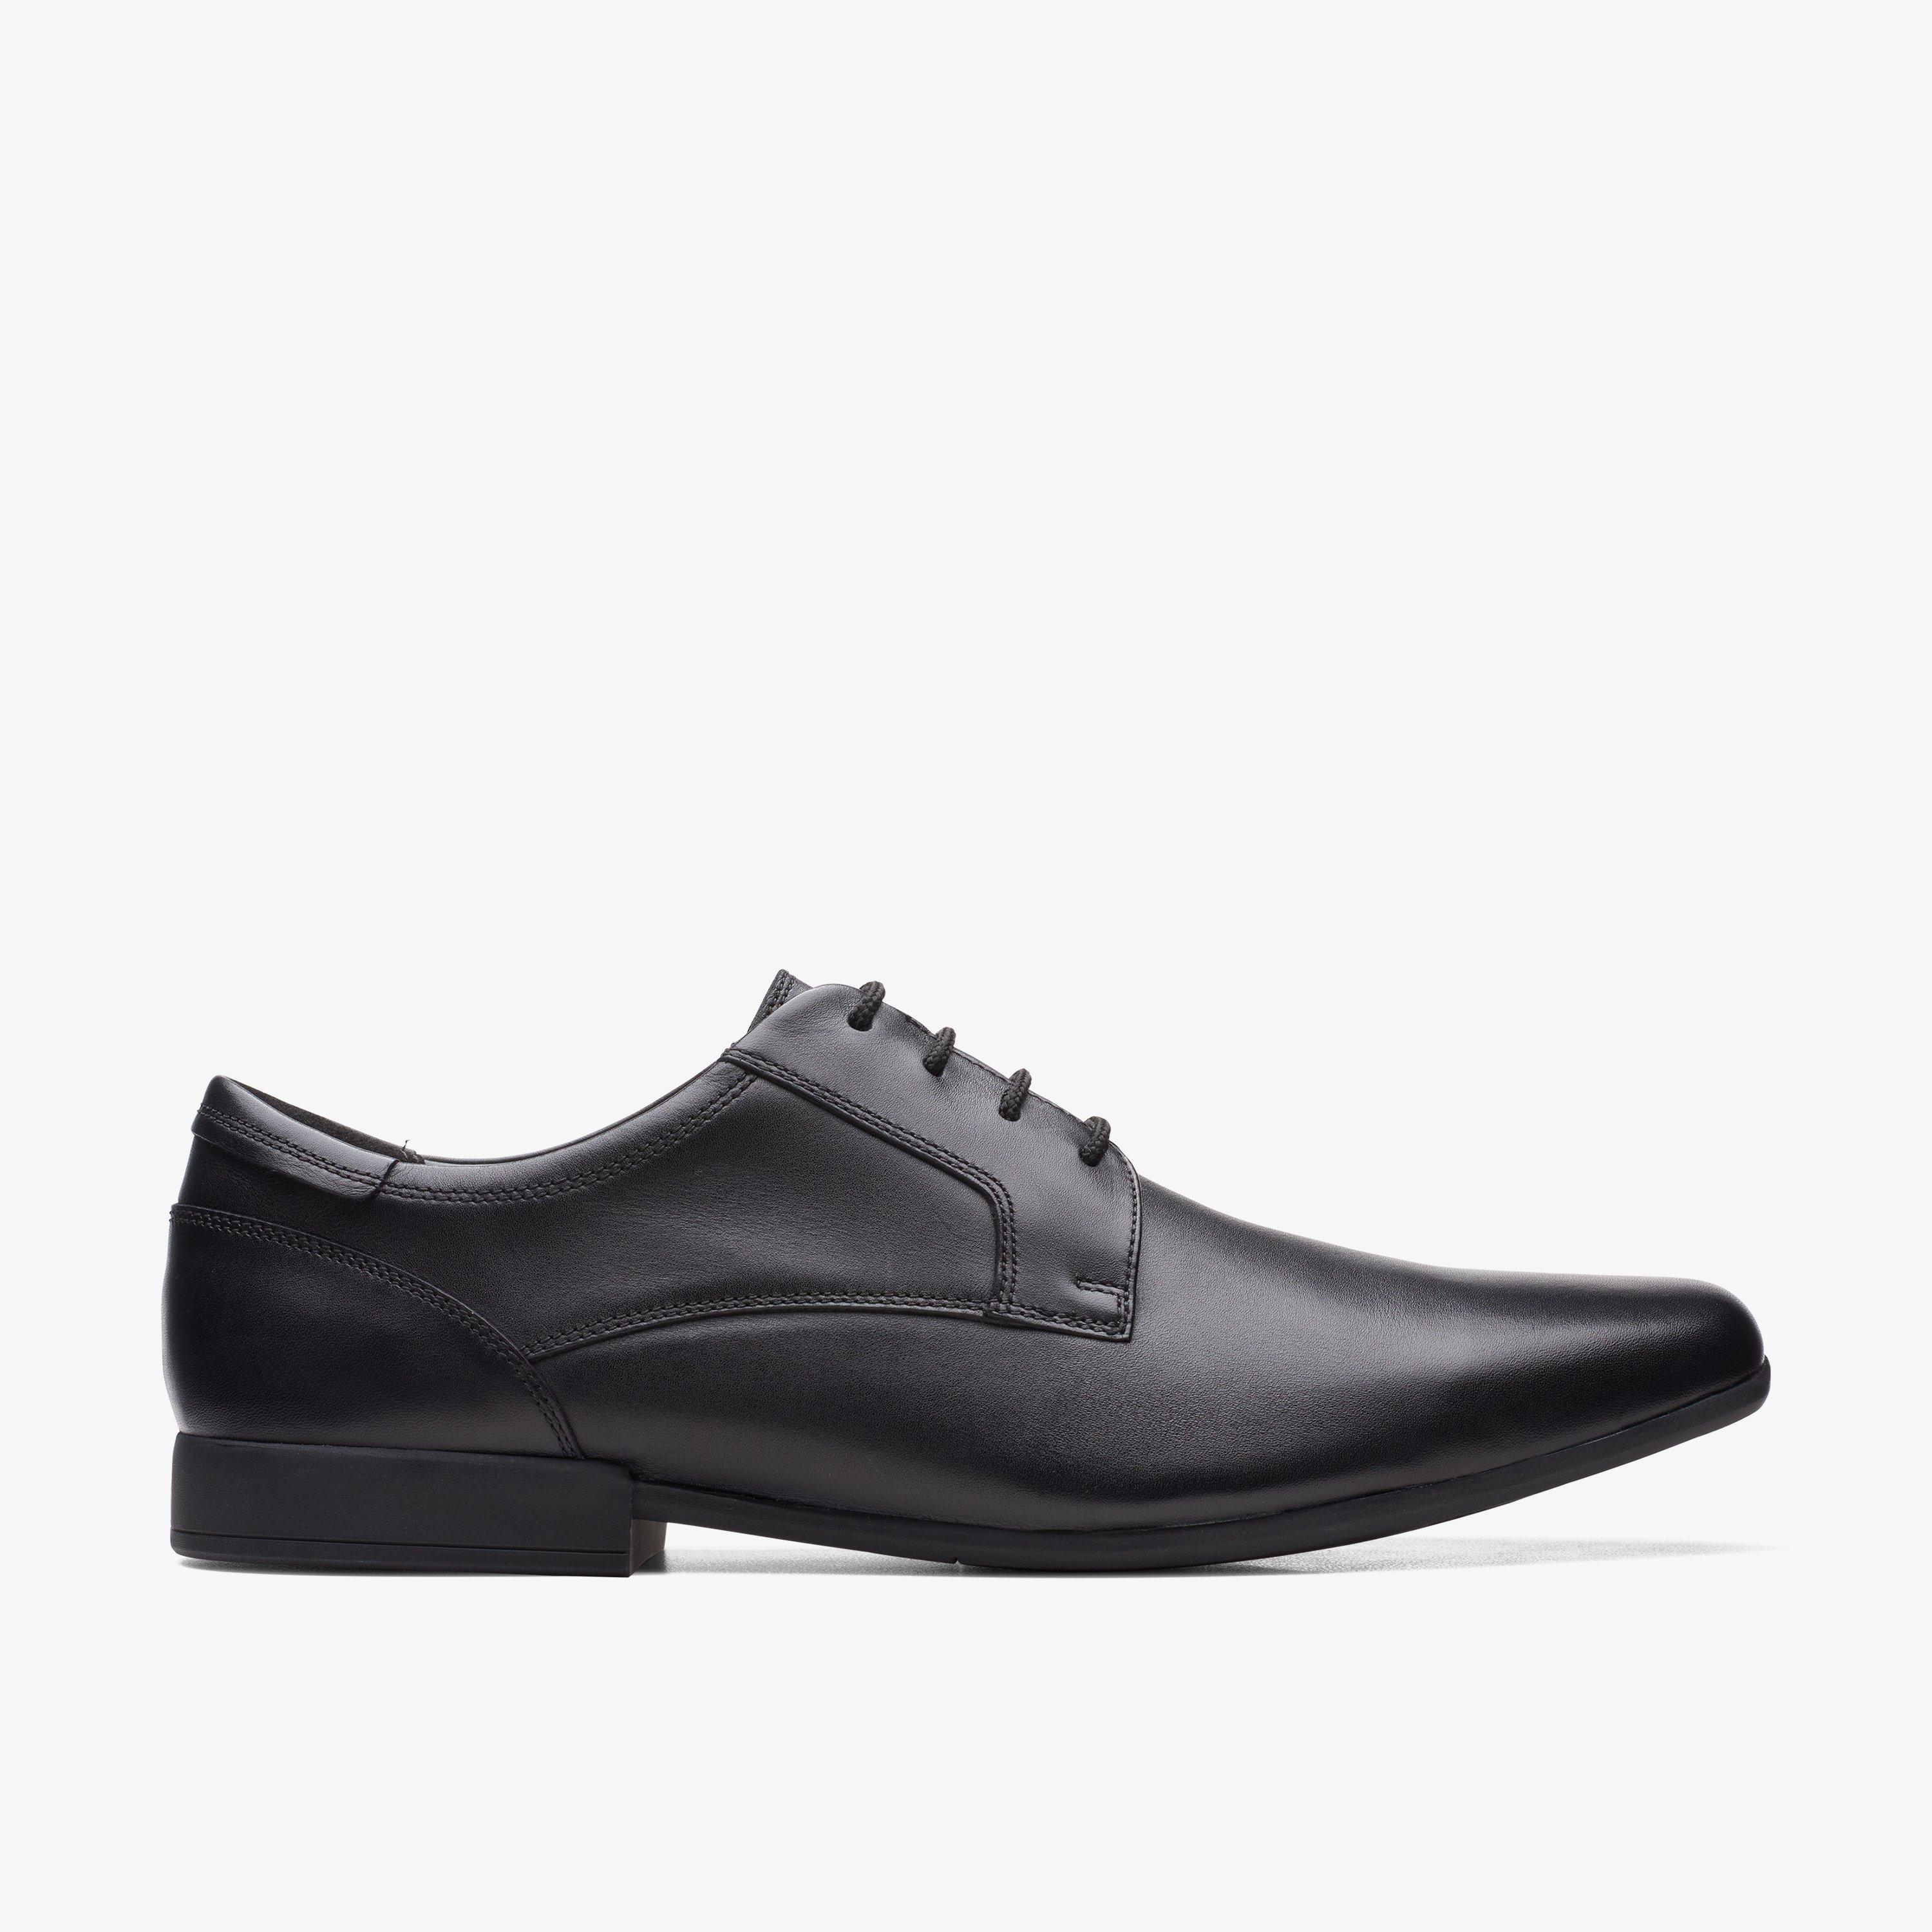 Size 12 Clarks Sidton Lace Black Leather shoes